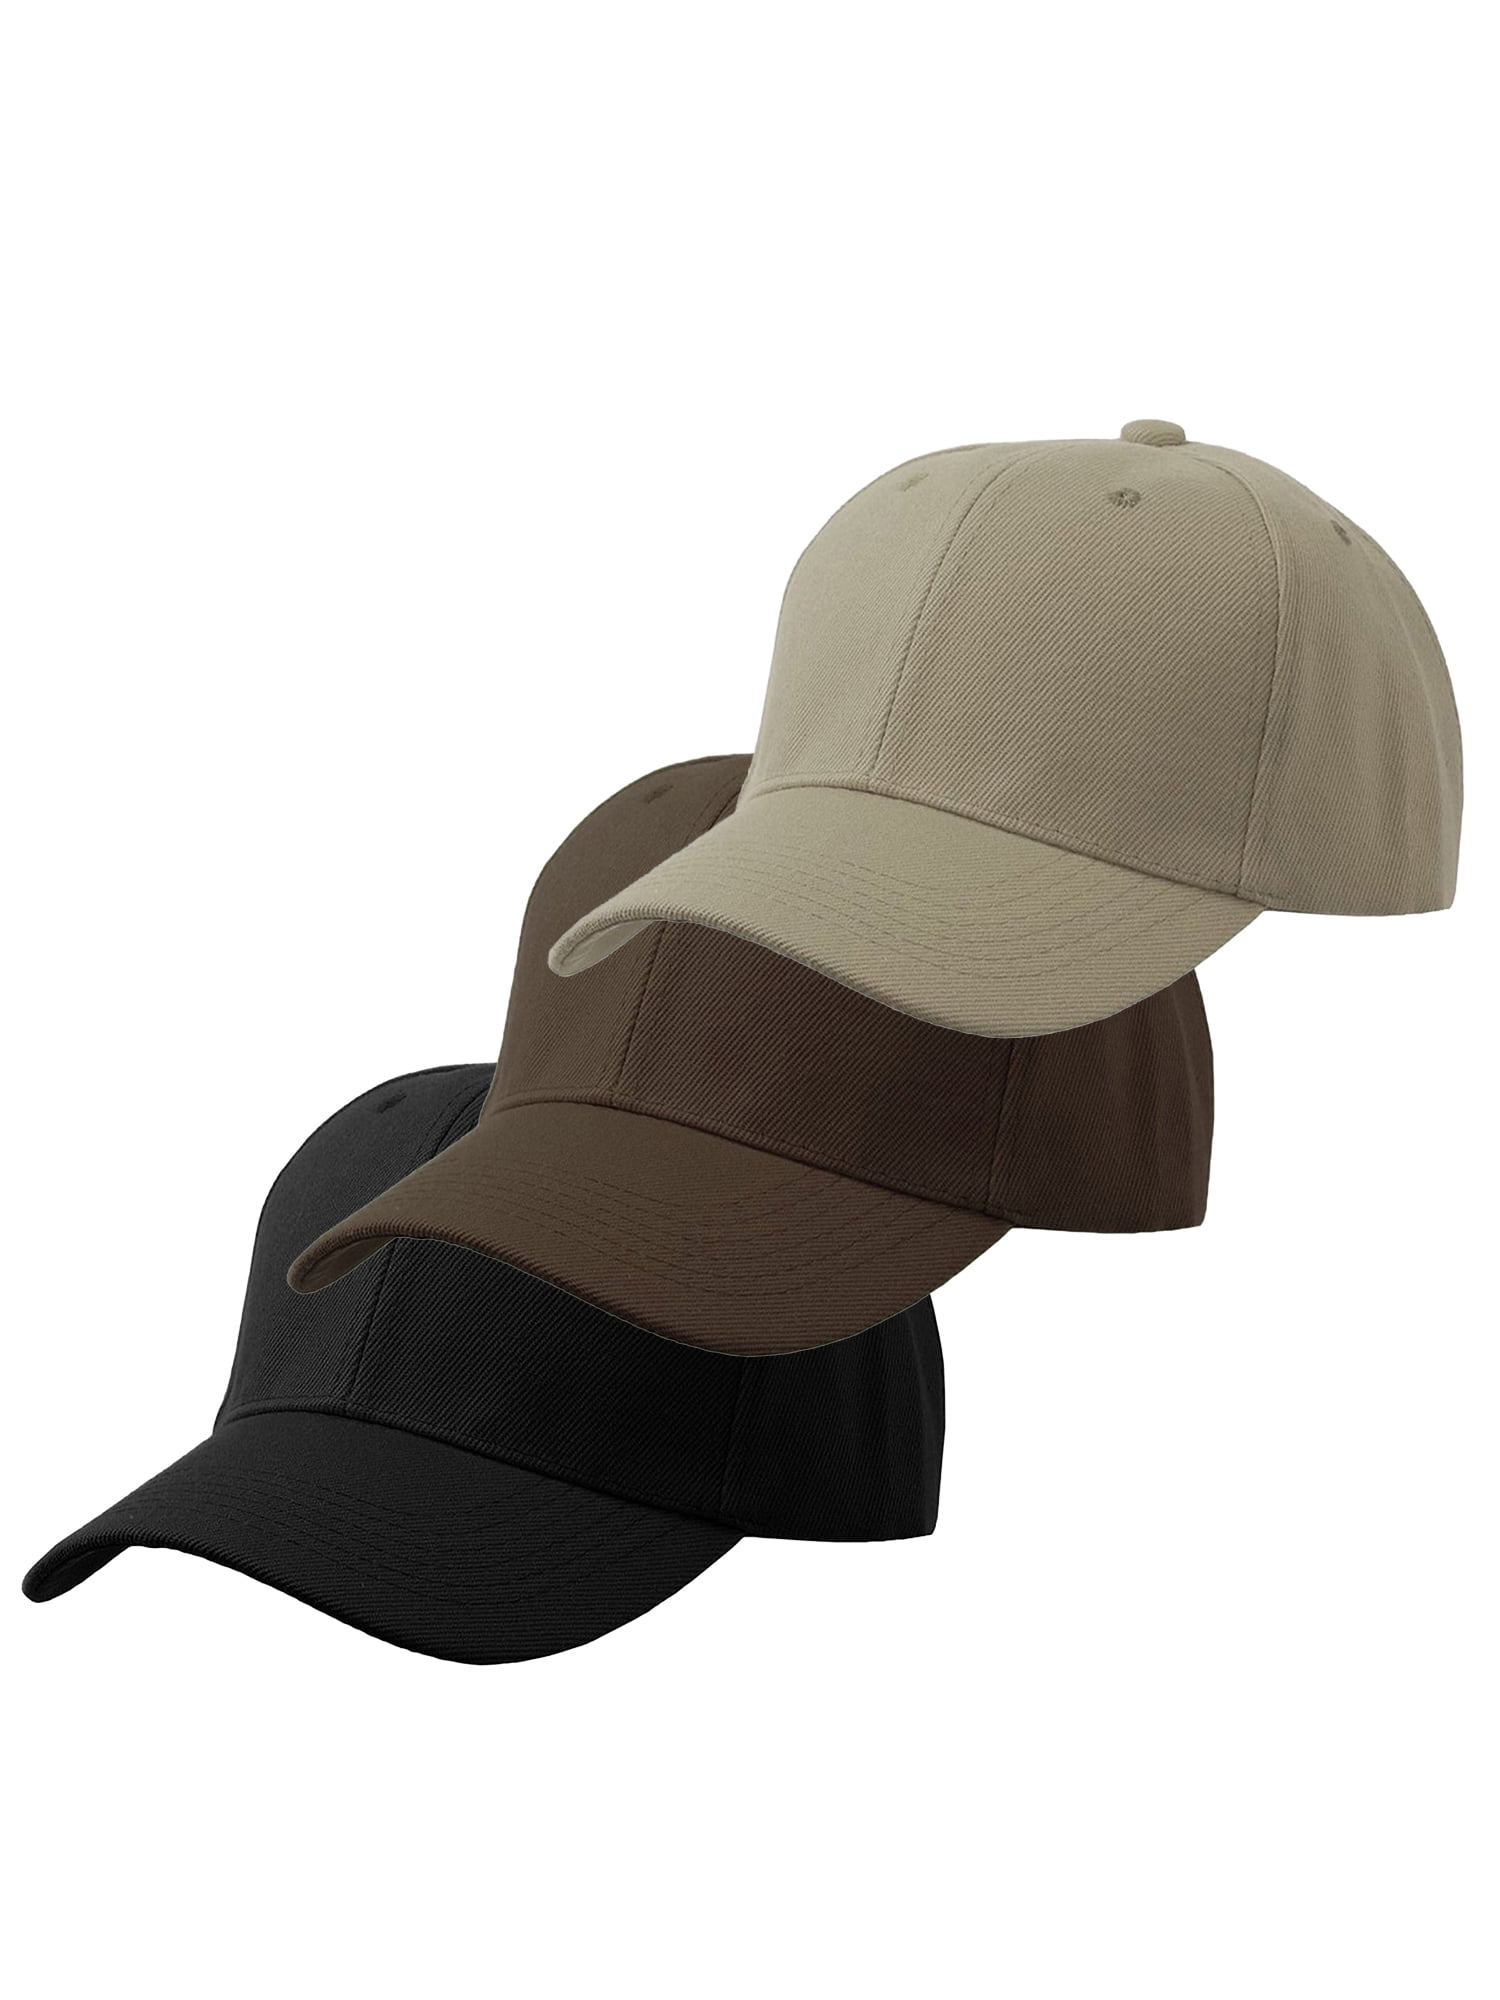 Mens Plain Baseball Cap Adjustable Curved Visor Hat 3p Black Dark